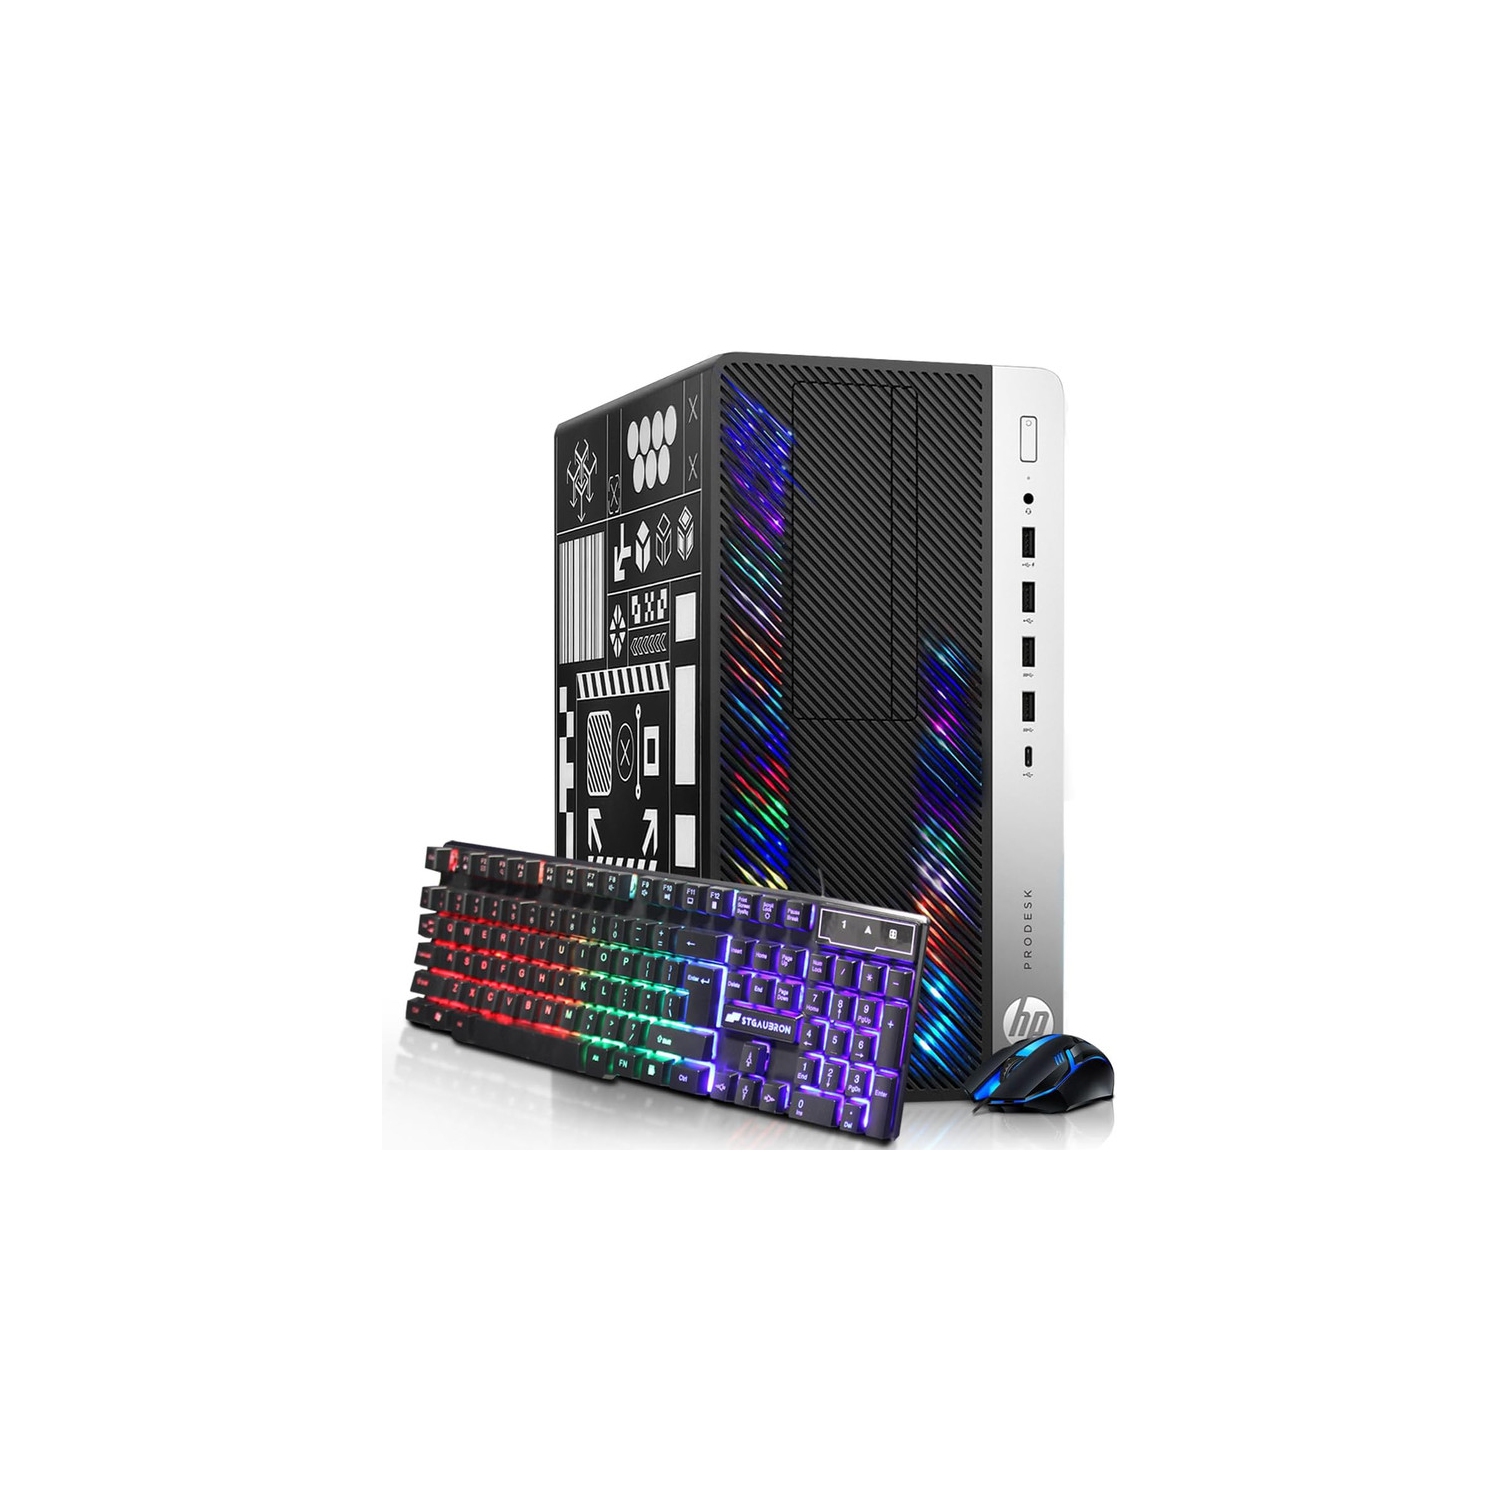 HP RGB Gaming Desktop Computer, Intel Quad Core I5-6500 up to 3.6GHz, GeForce GT 1030 2G, 16GB DDR4, 512G SSD, RGB KB & MS, 600M WiFi & BT 5.0, Win 10 Pro -Refurbished Excellent